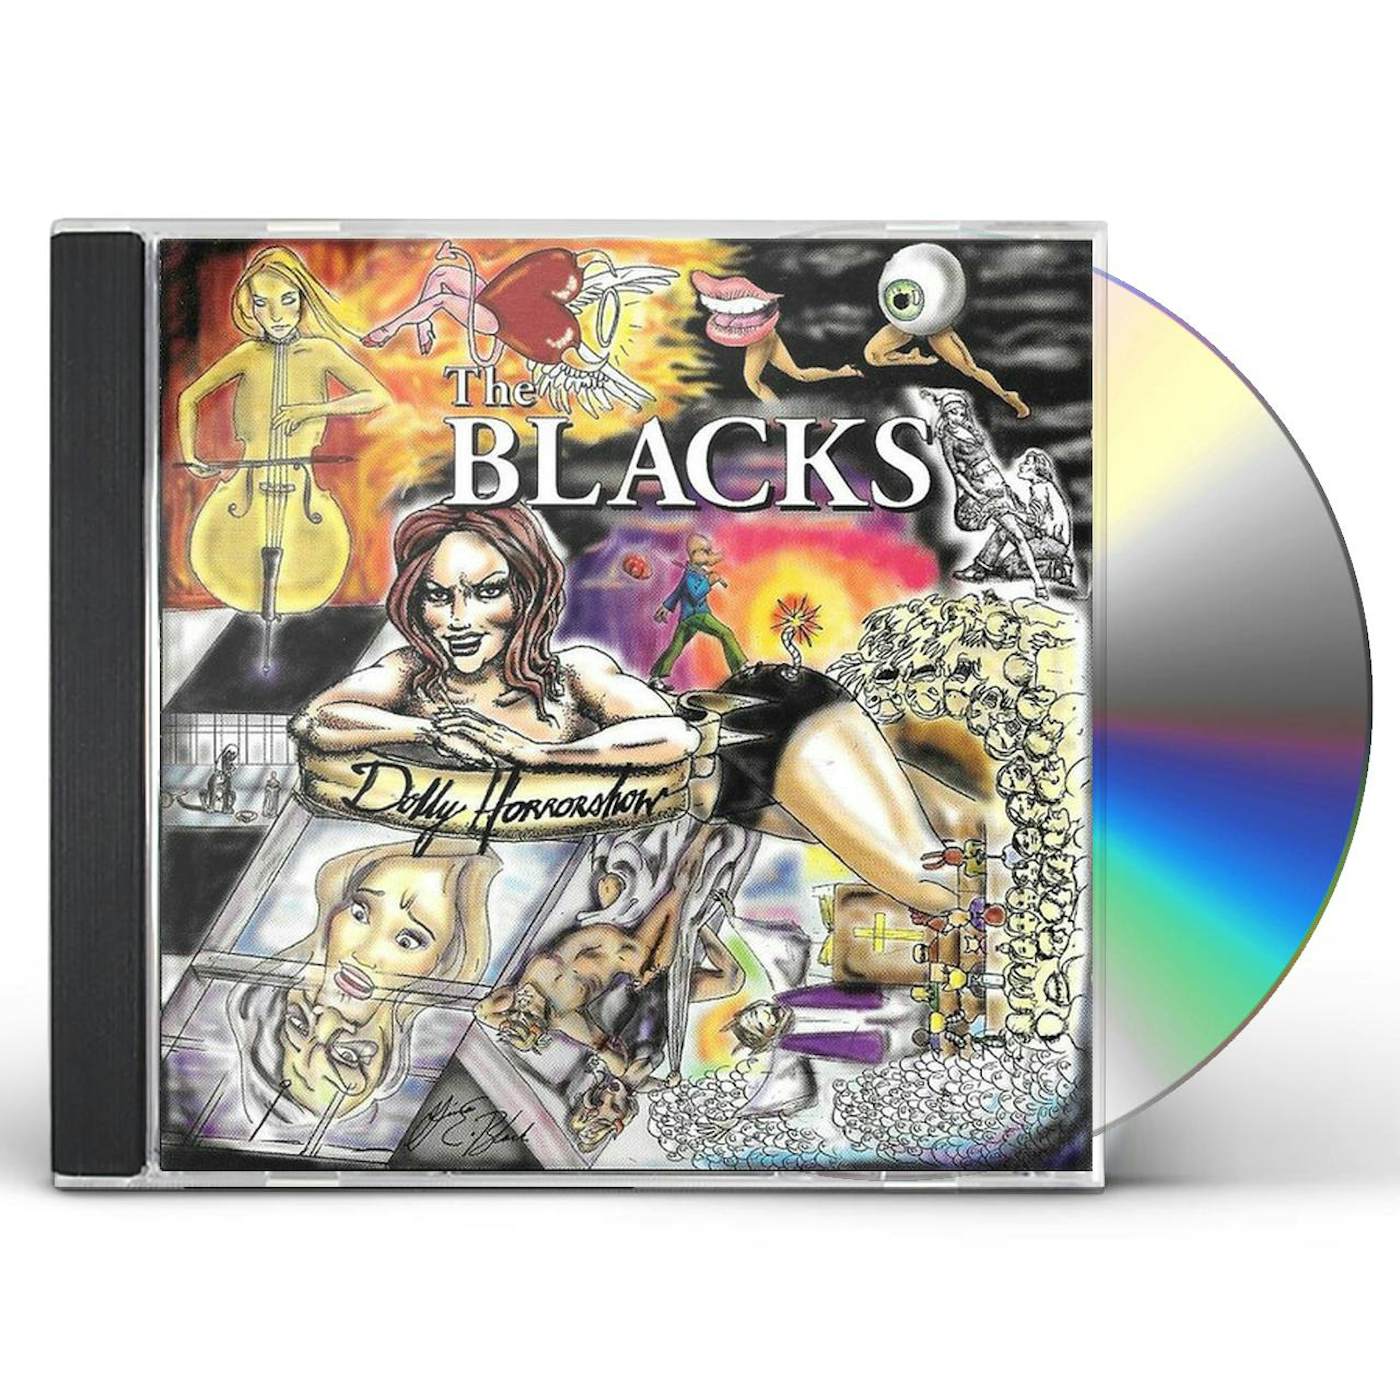 Blacks DOLLY HORROWSHOW CD